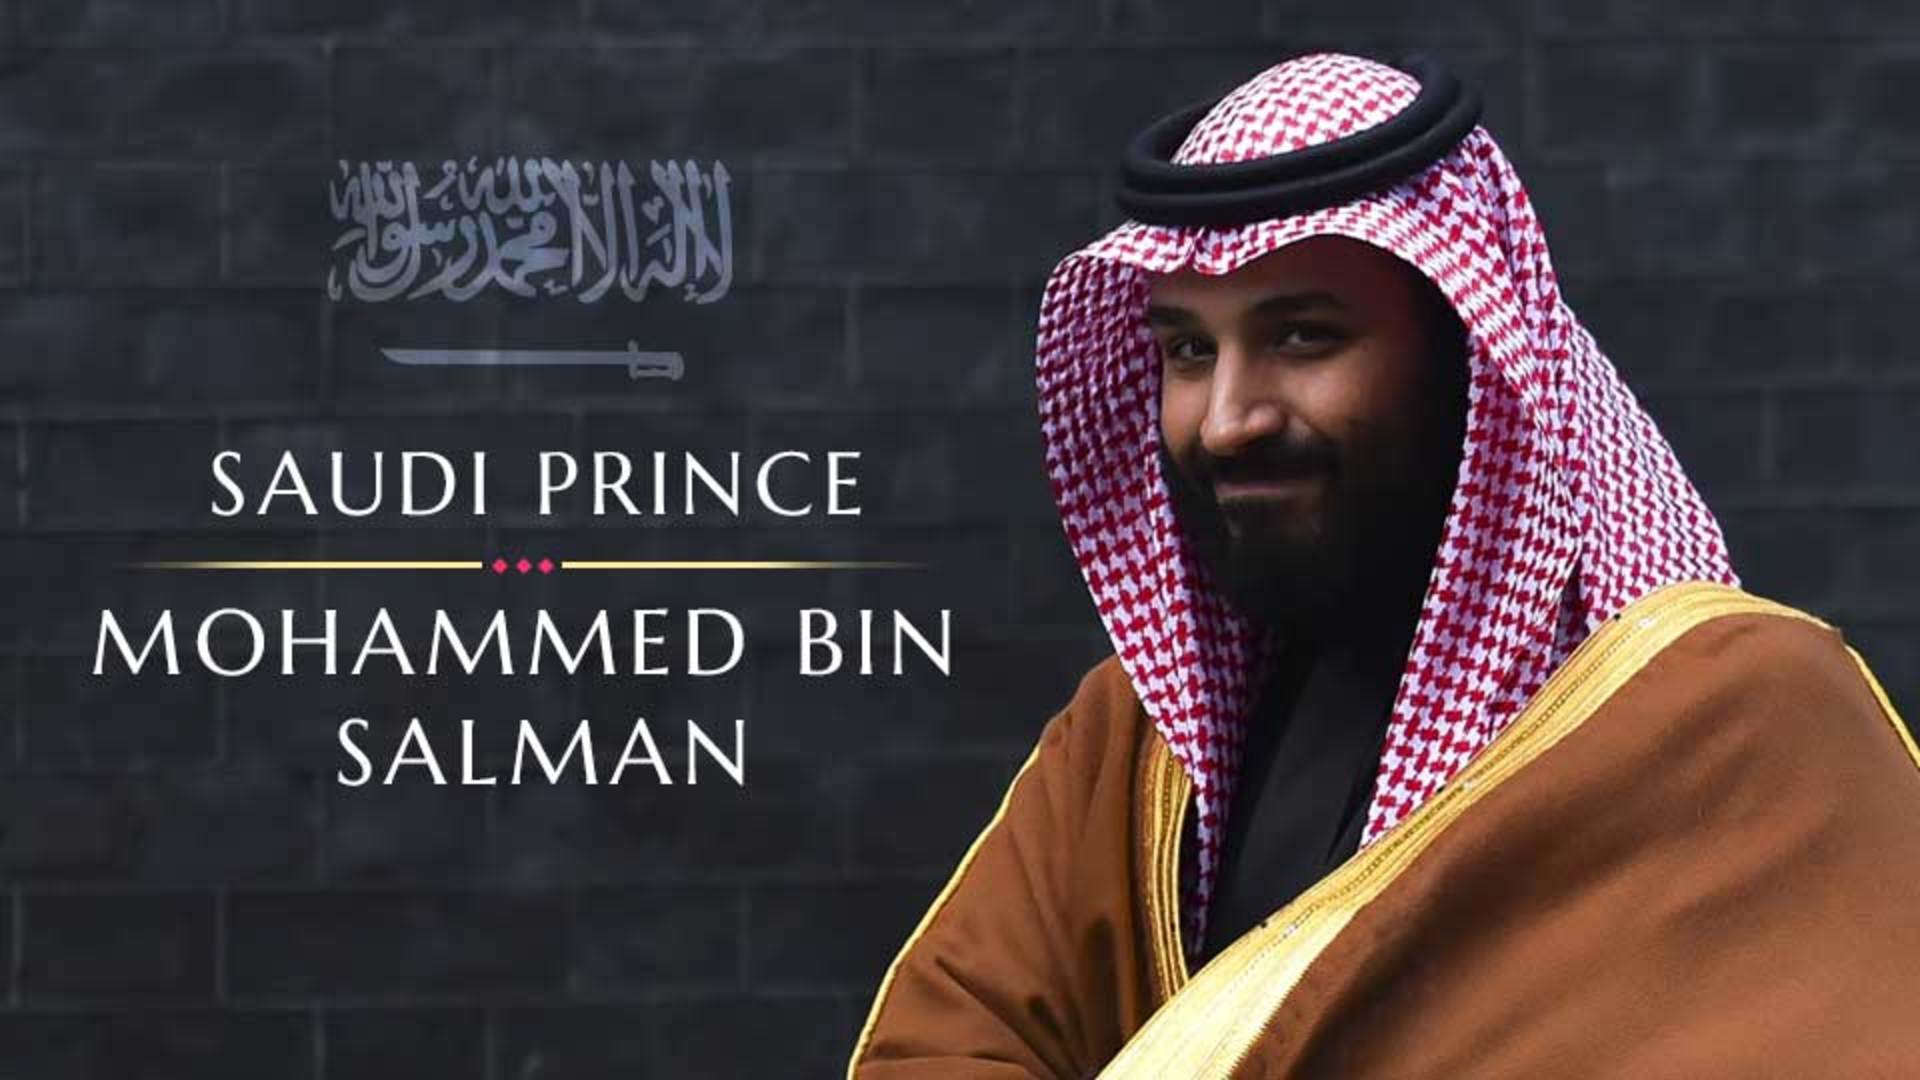 Who Is Saudi Prince Mohammed Bin Salman?